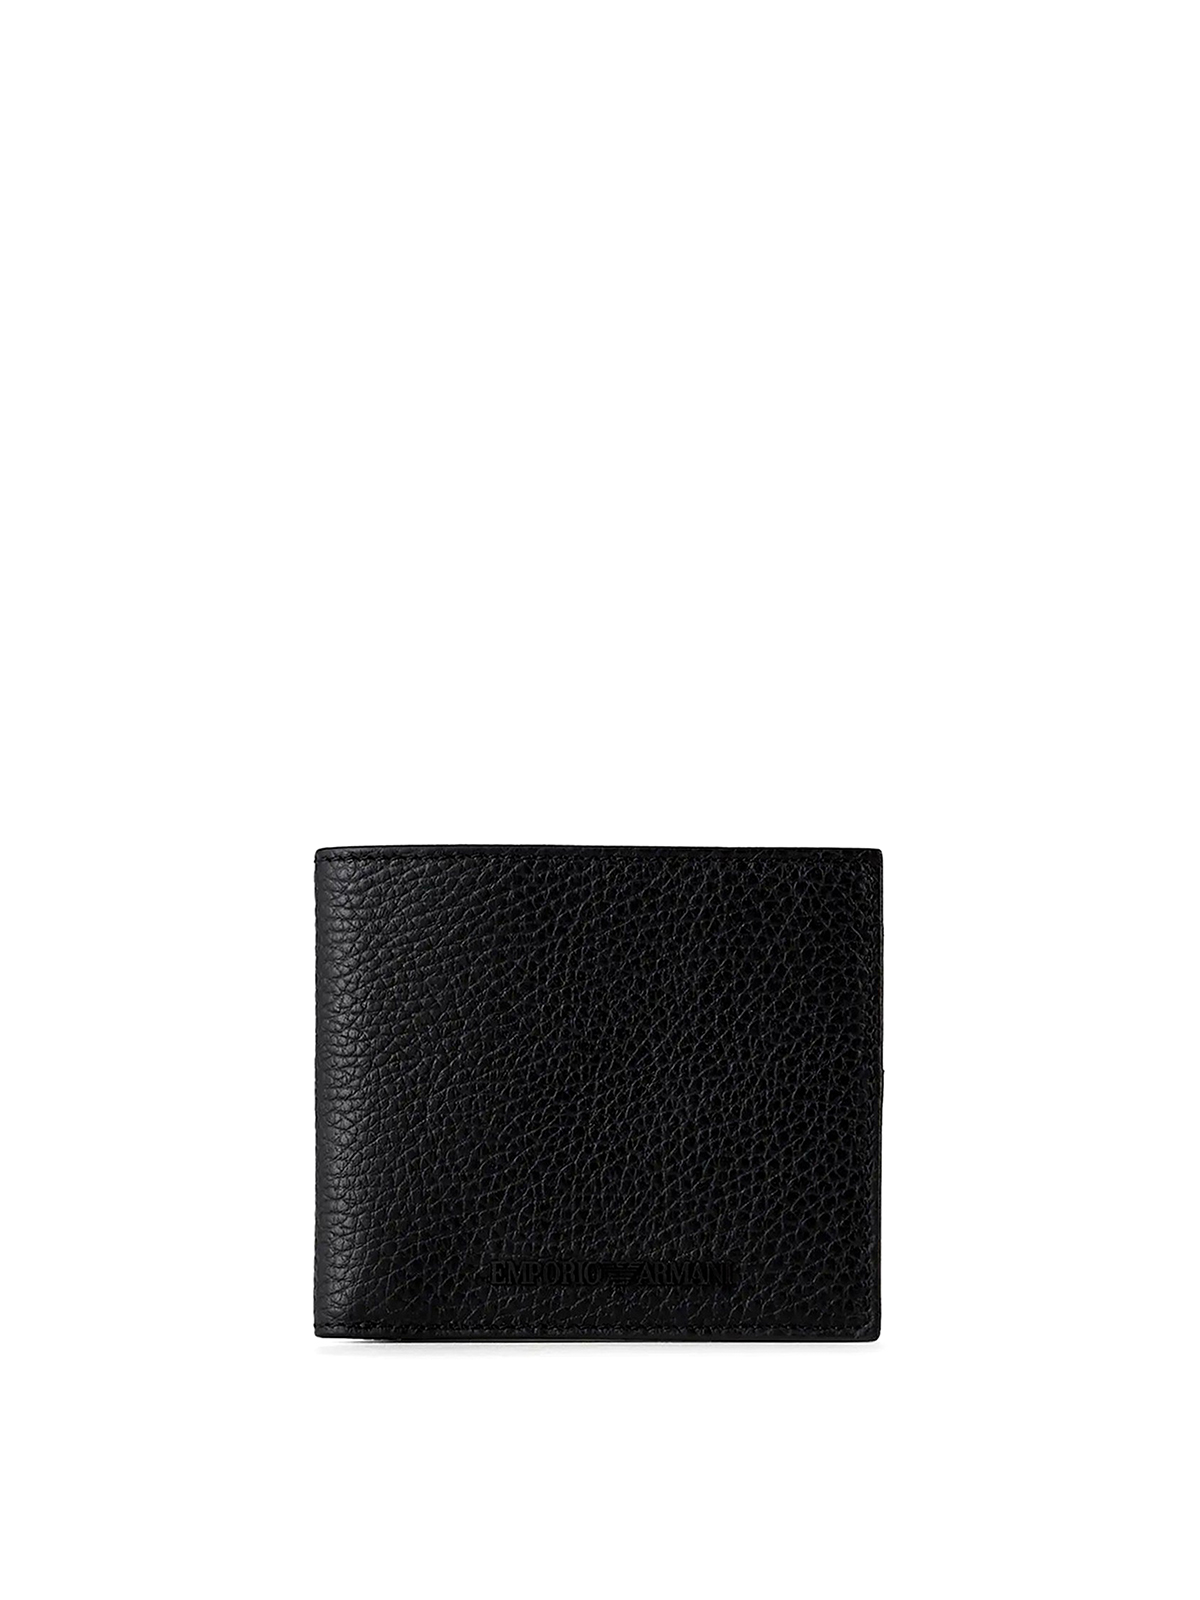 Emporio Armani Logo Leather Wallet In Black